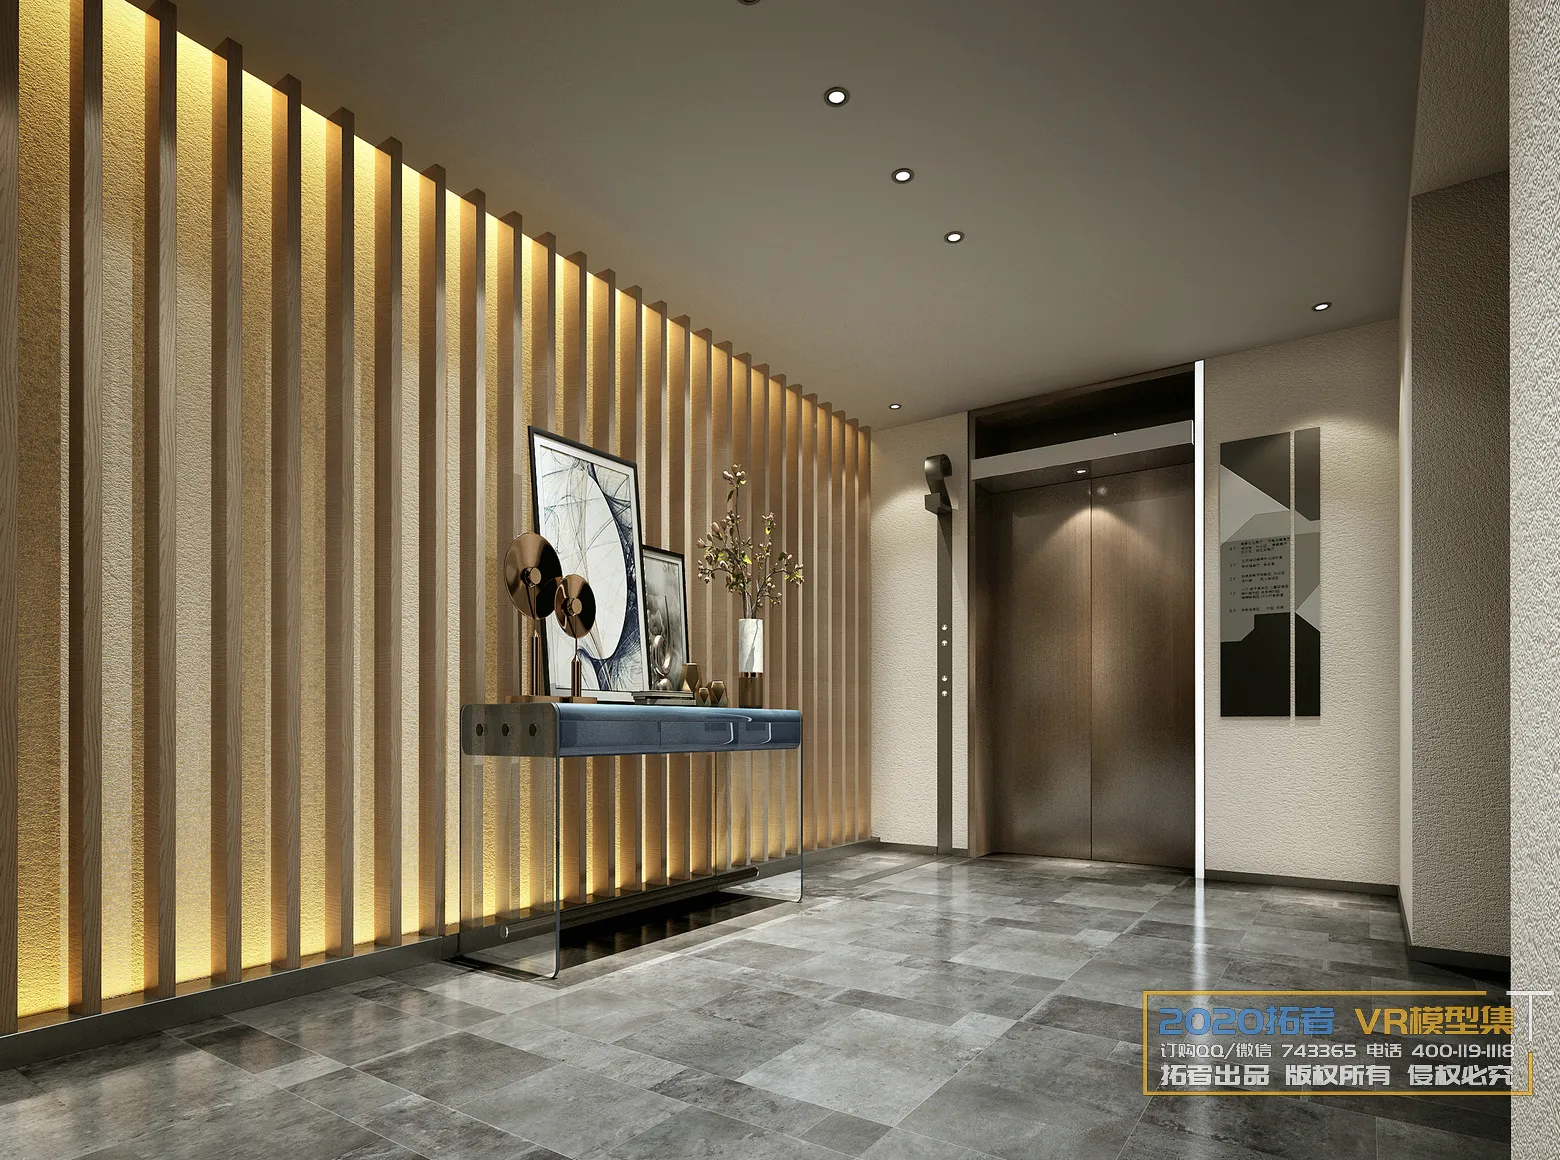 Extension Interior 20 – 12 – ELEVATOR & CORRIDOR – 27